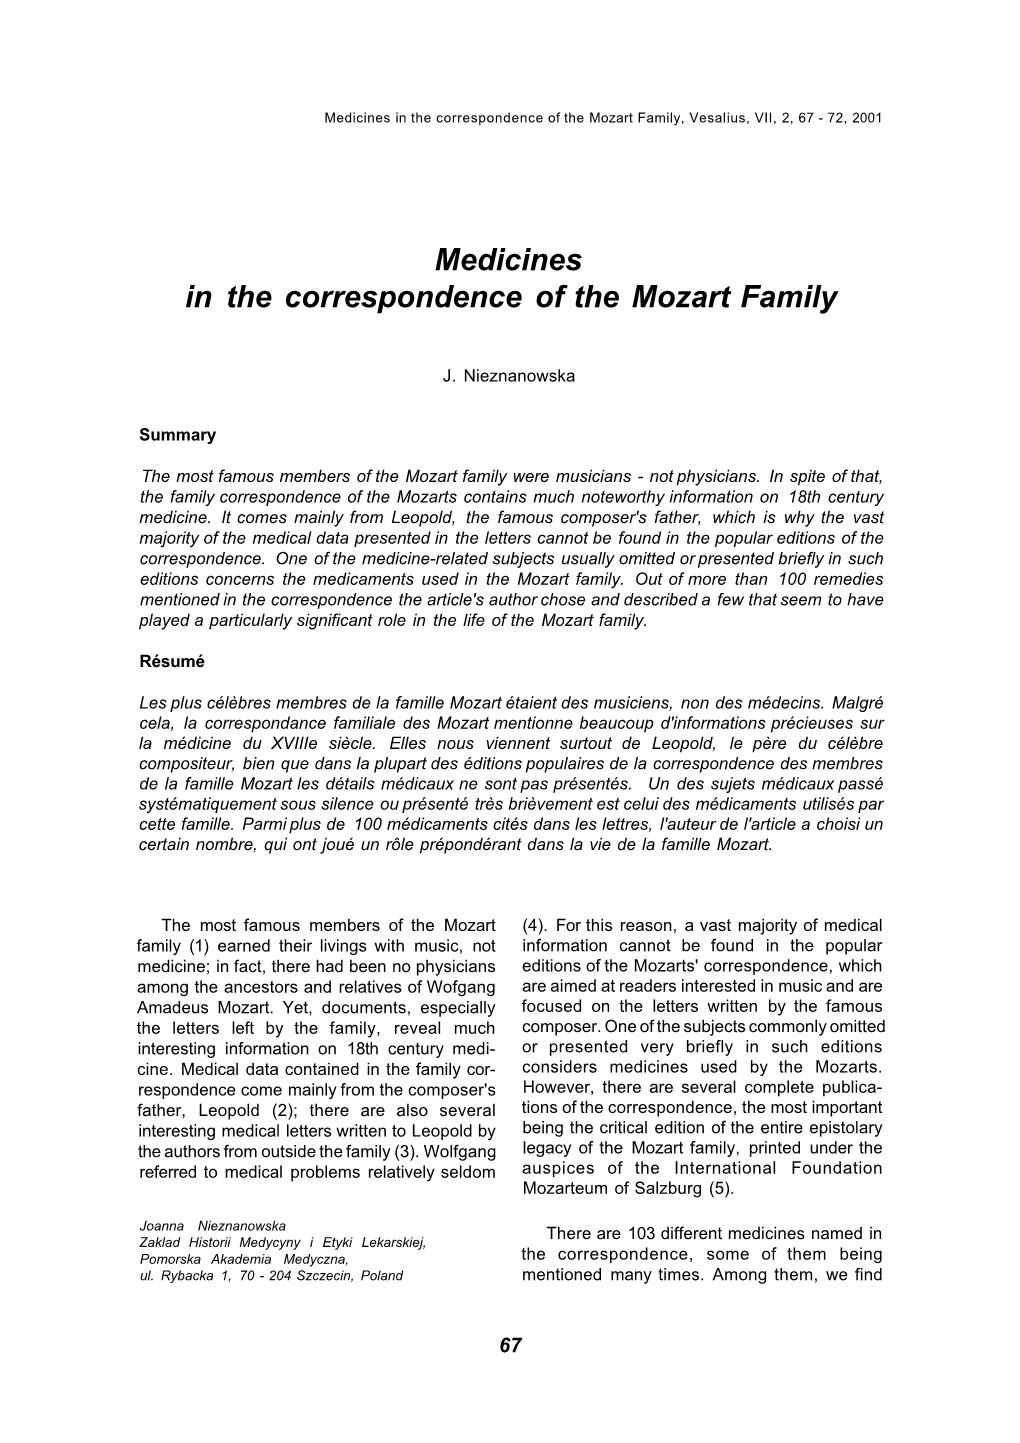 Medicines in the Correspondence of the Mozart Family, Vesalius, VII, 2, 67 - 72, 2001